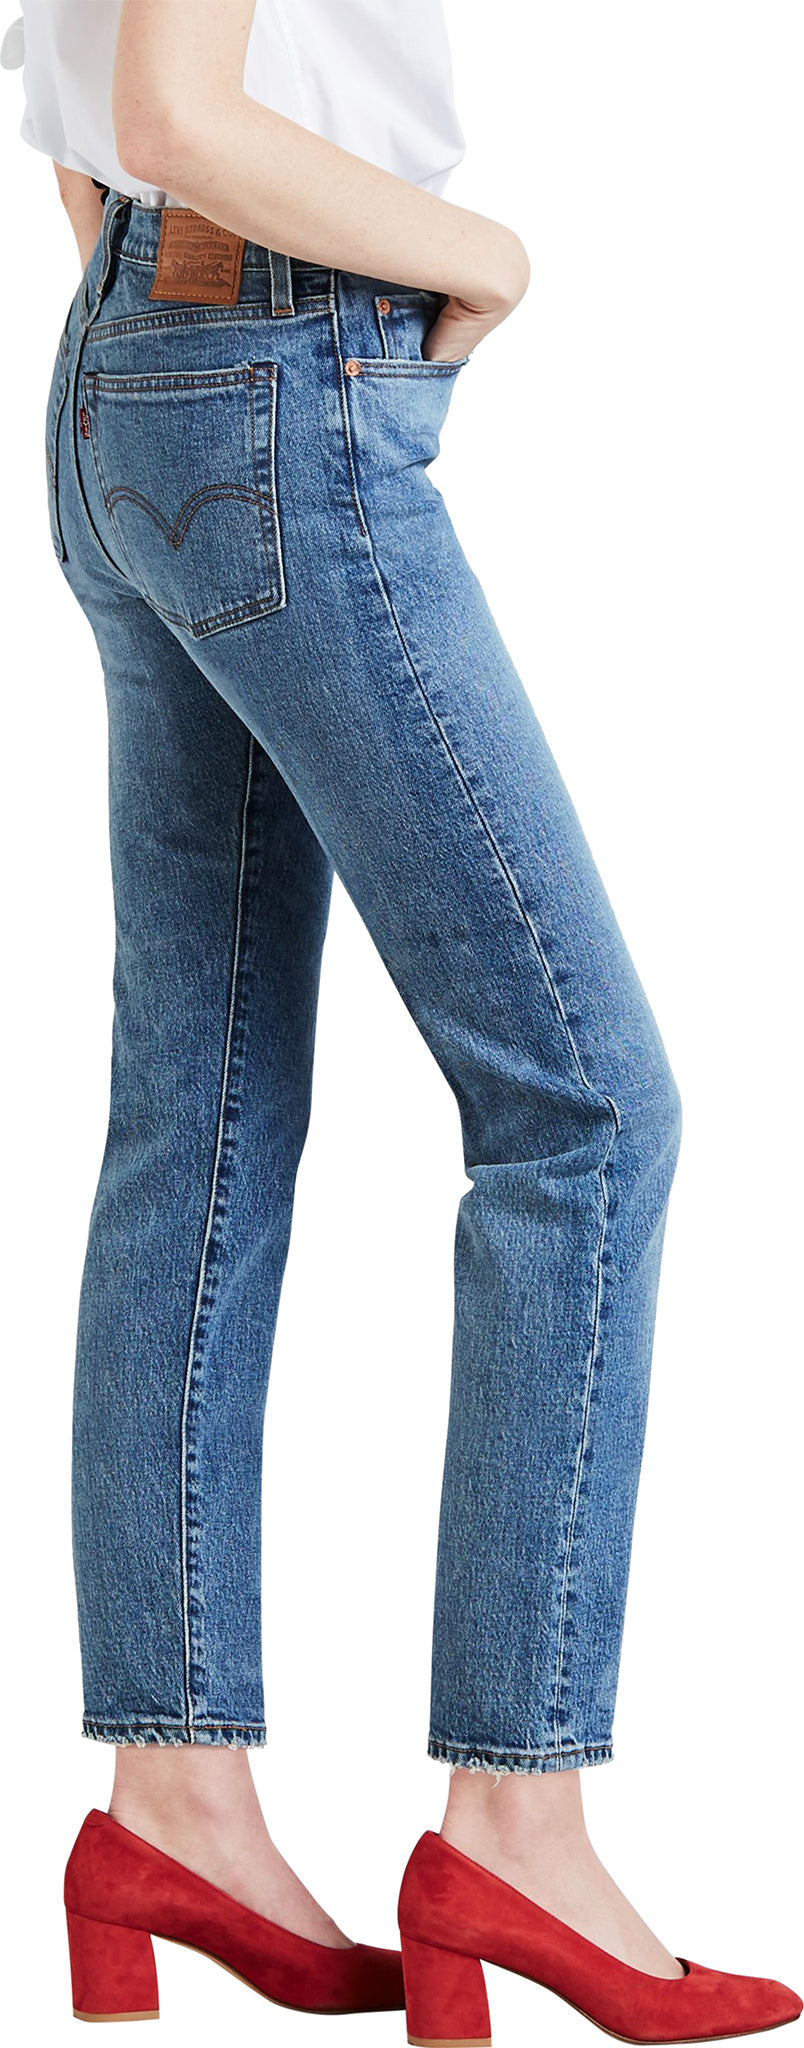 Levi's Wedgie Jeans - Women's